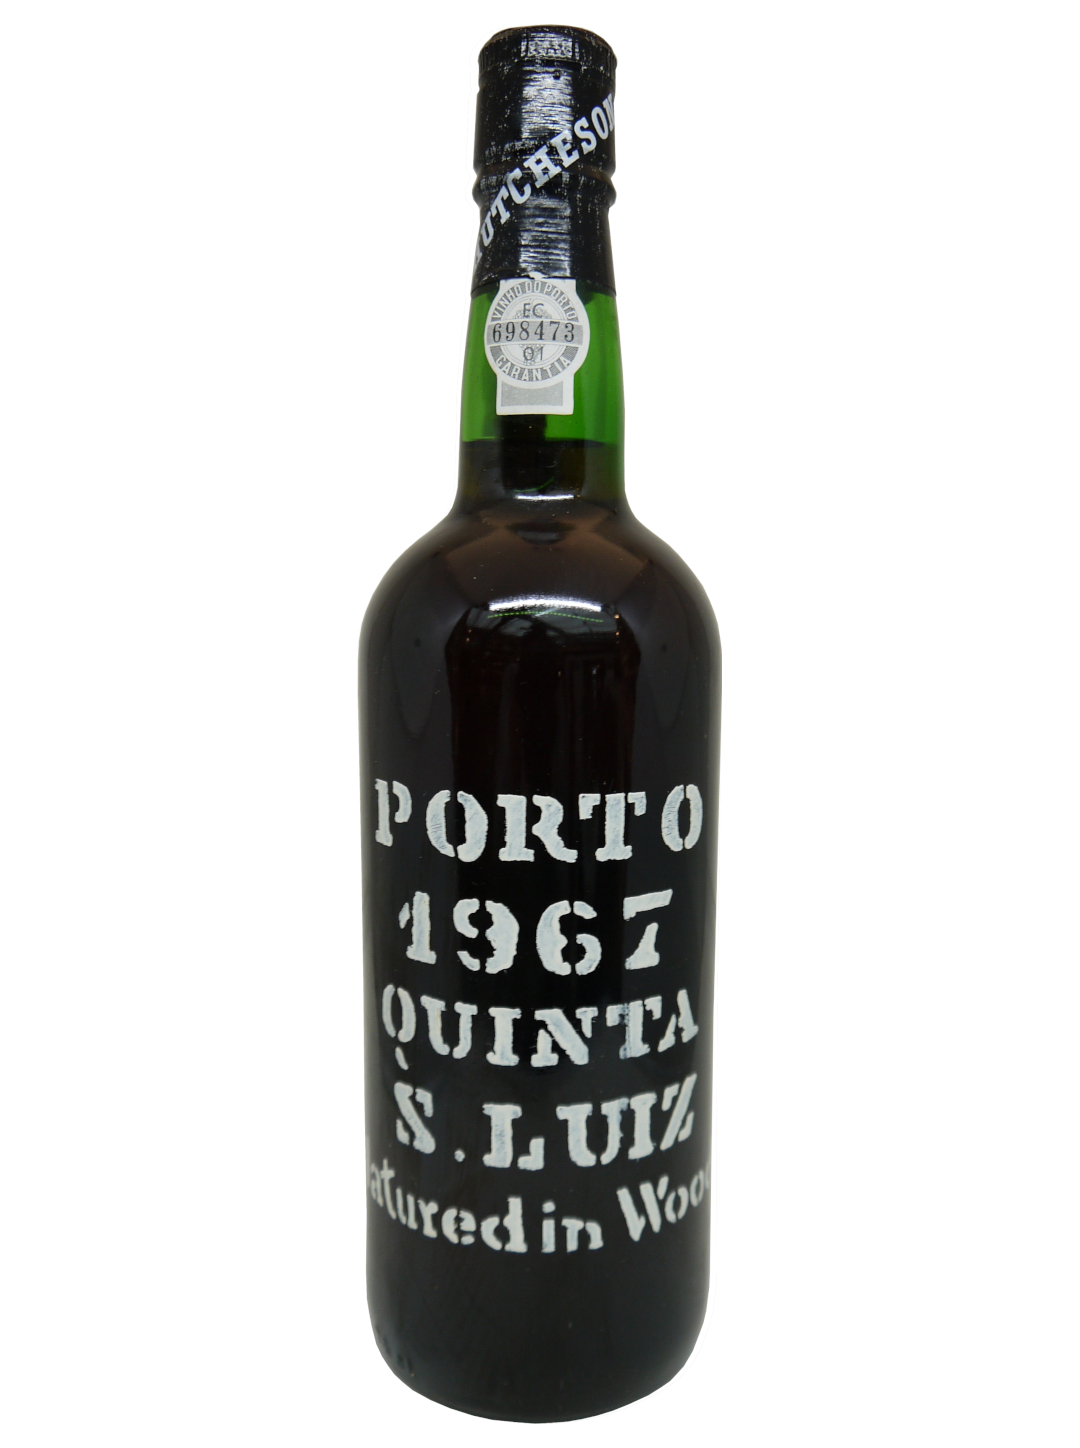 Porto 1967 Quinta S. Luiz